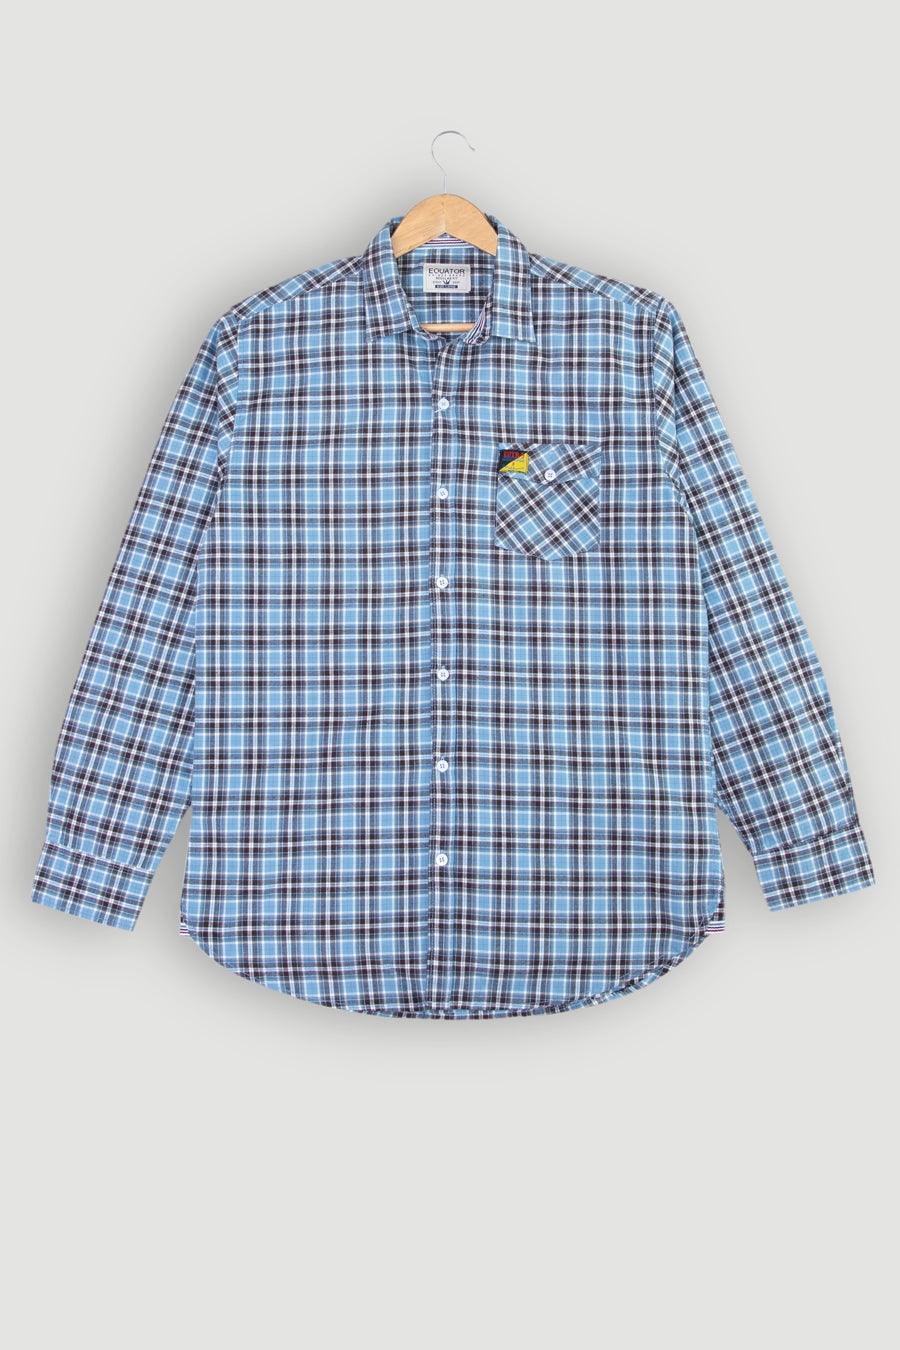 Brown Checkered Shirt - Equator Stores